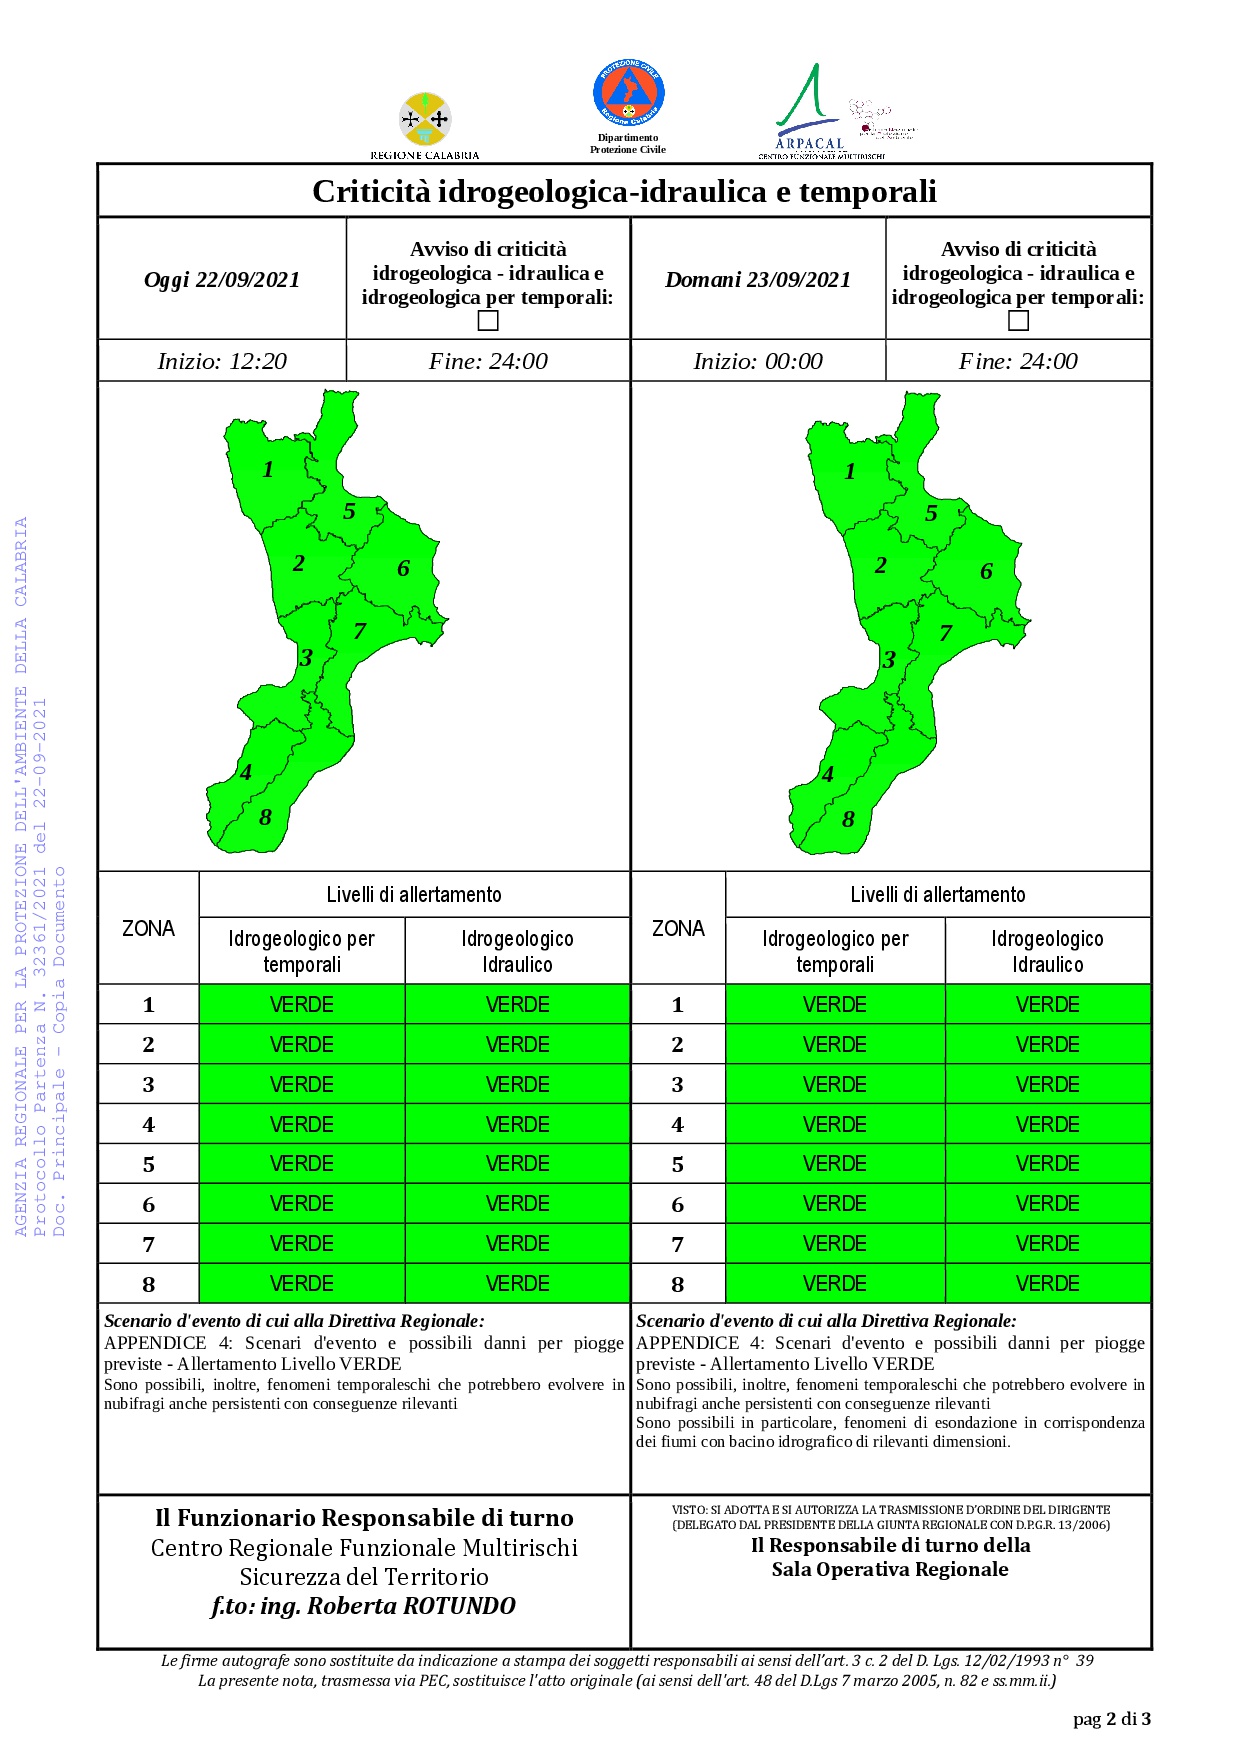 Criticità idrogeologica-idraulica e temporali in Calabria 22-09-2021